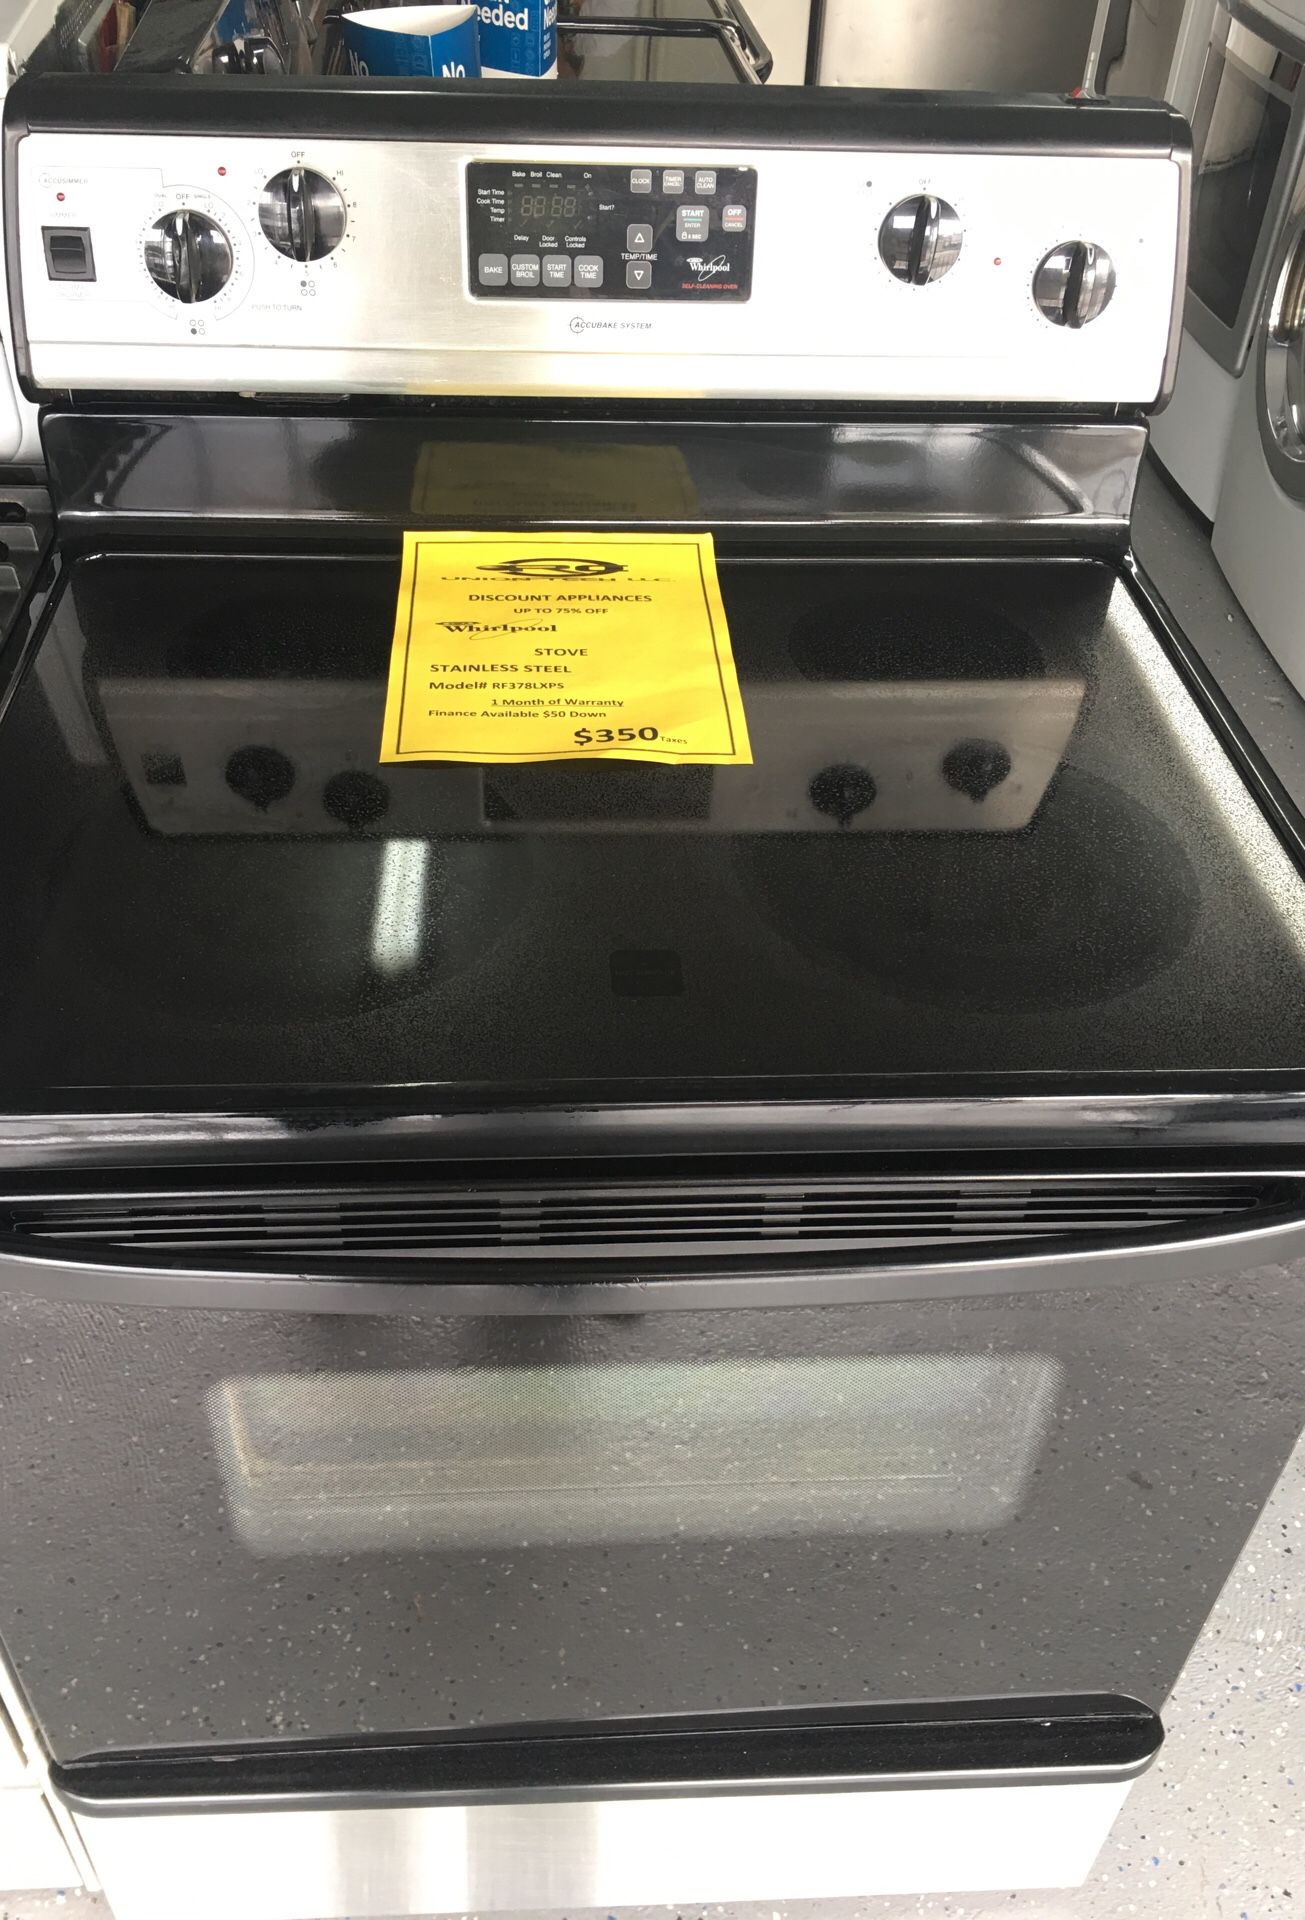 Whirlpool stove-30 days warranty